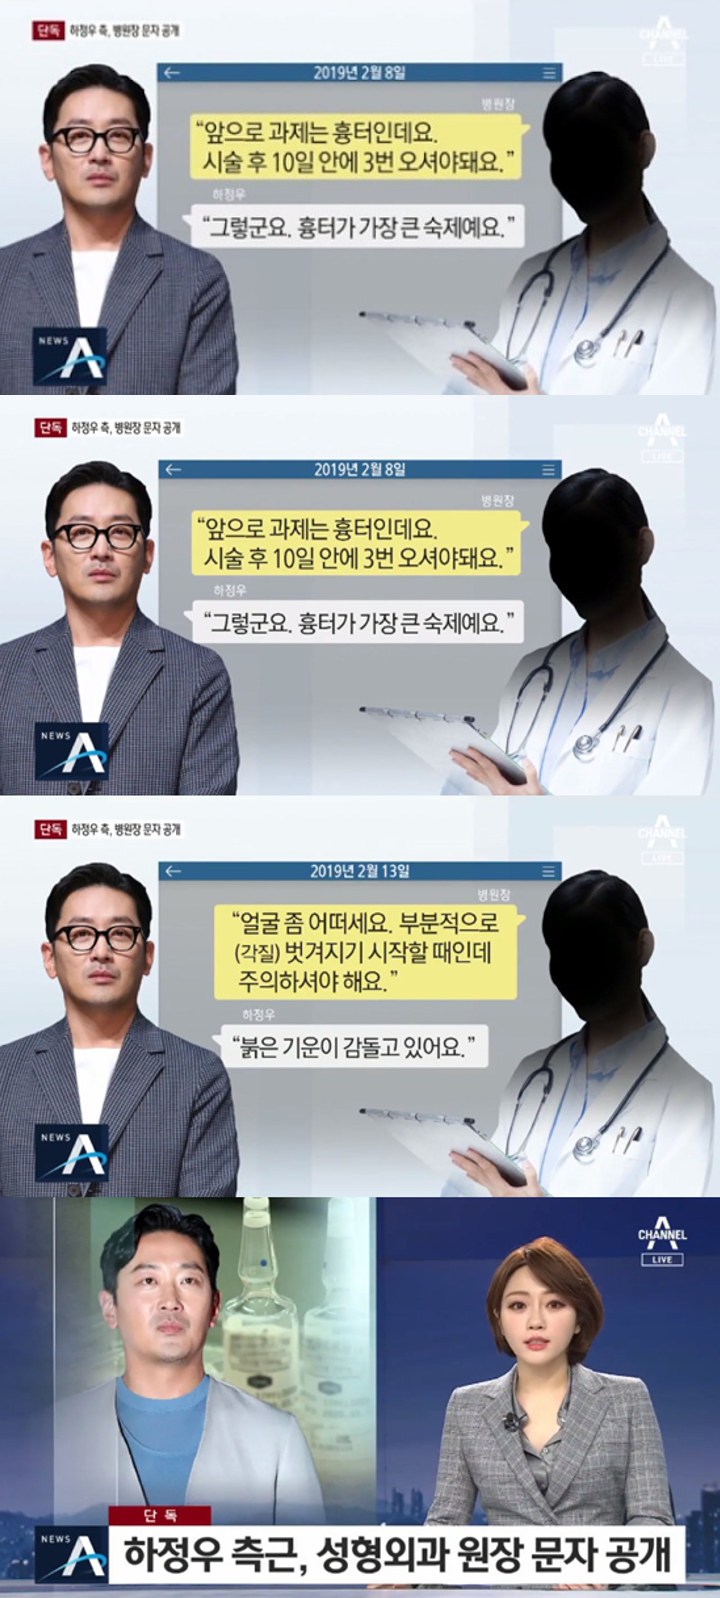 Ha Jung Woo Beber Bukti SMS Soal Propofol, Netizen Bongkar Aib Rumah Sakit